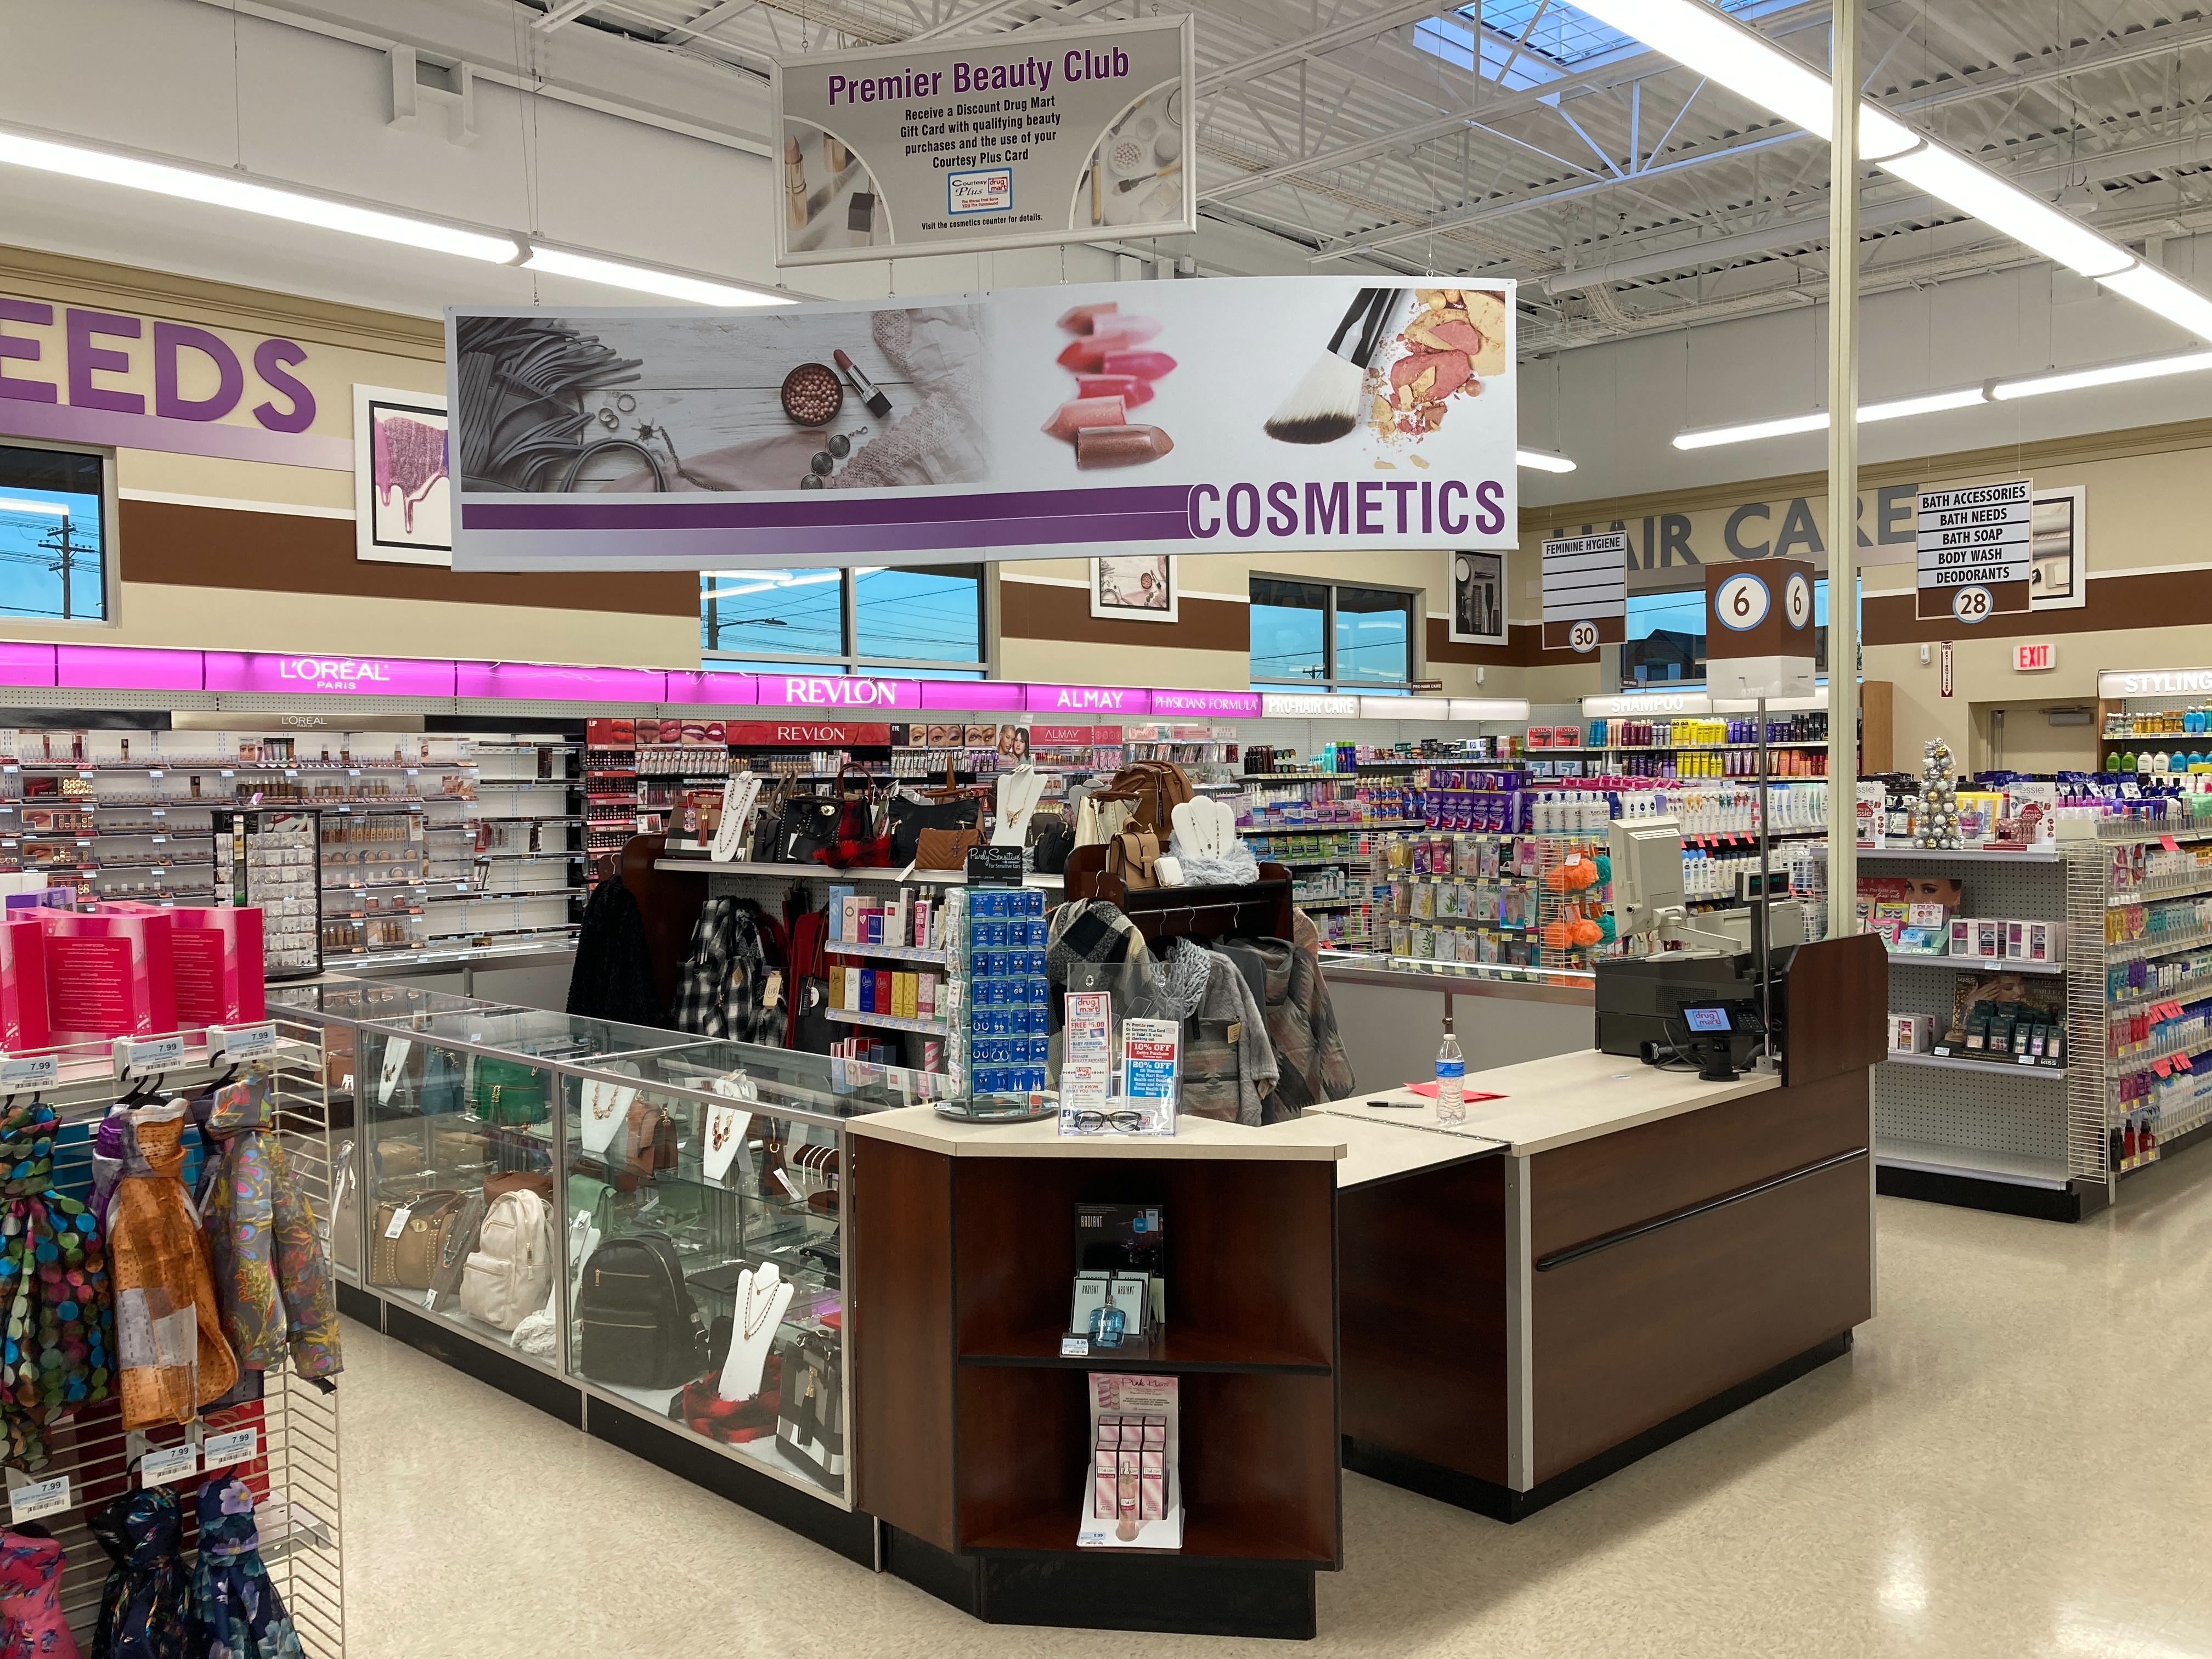 Discount Drug Mart-Convenience Store-Parma-Ohio-cosmetics